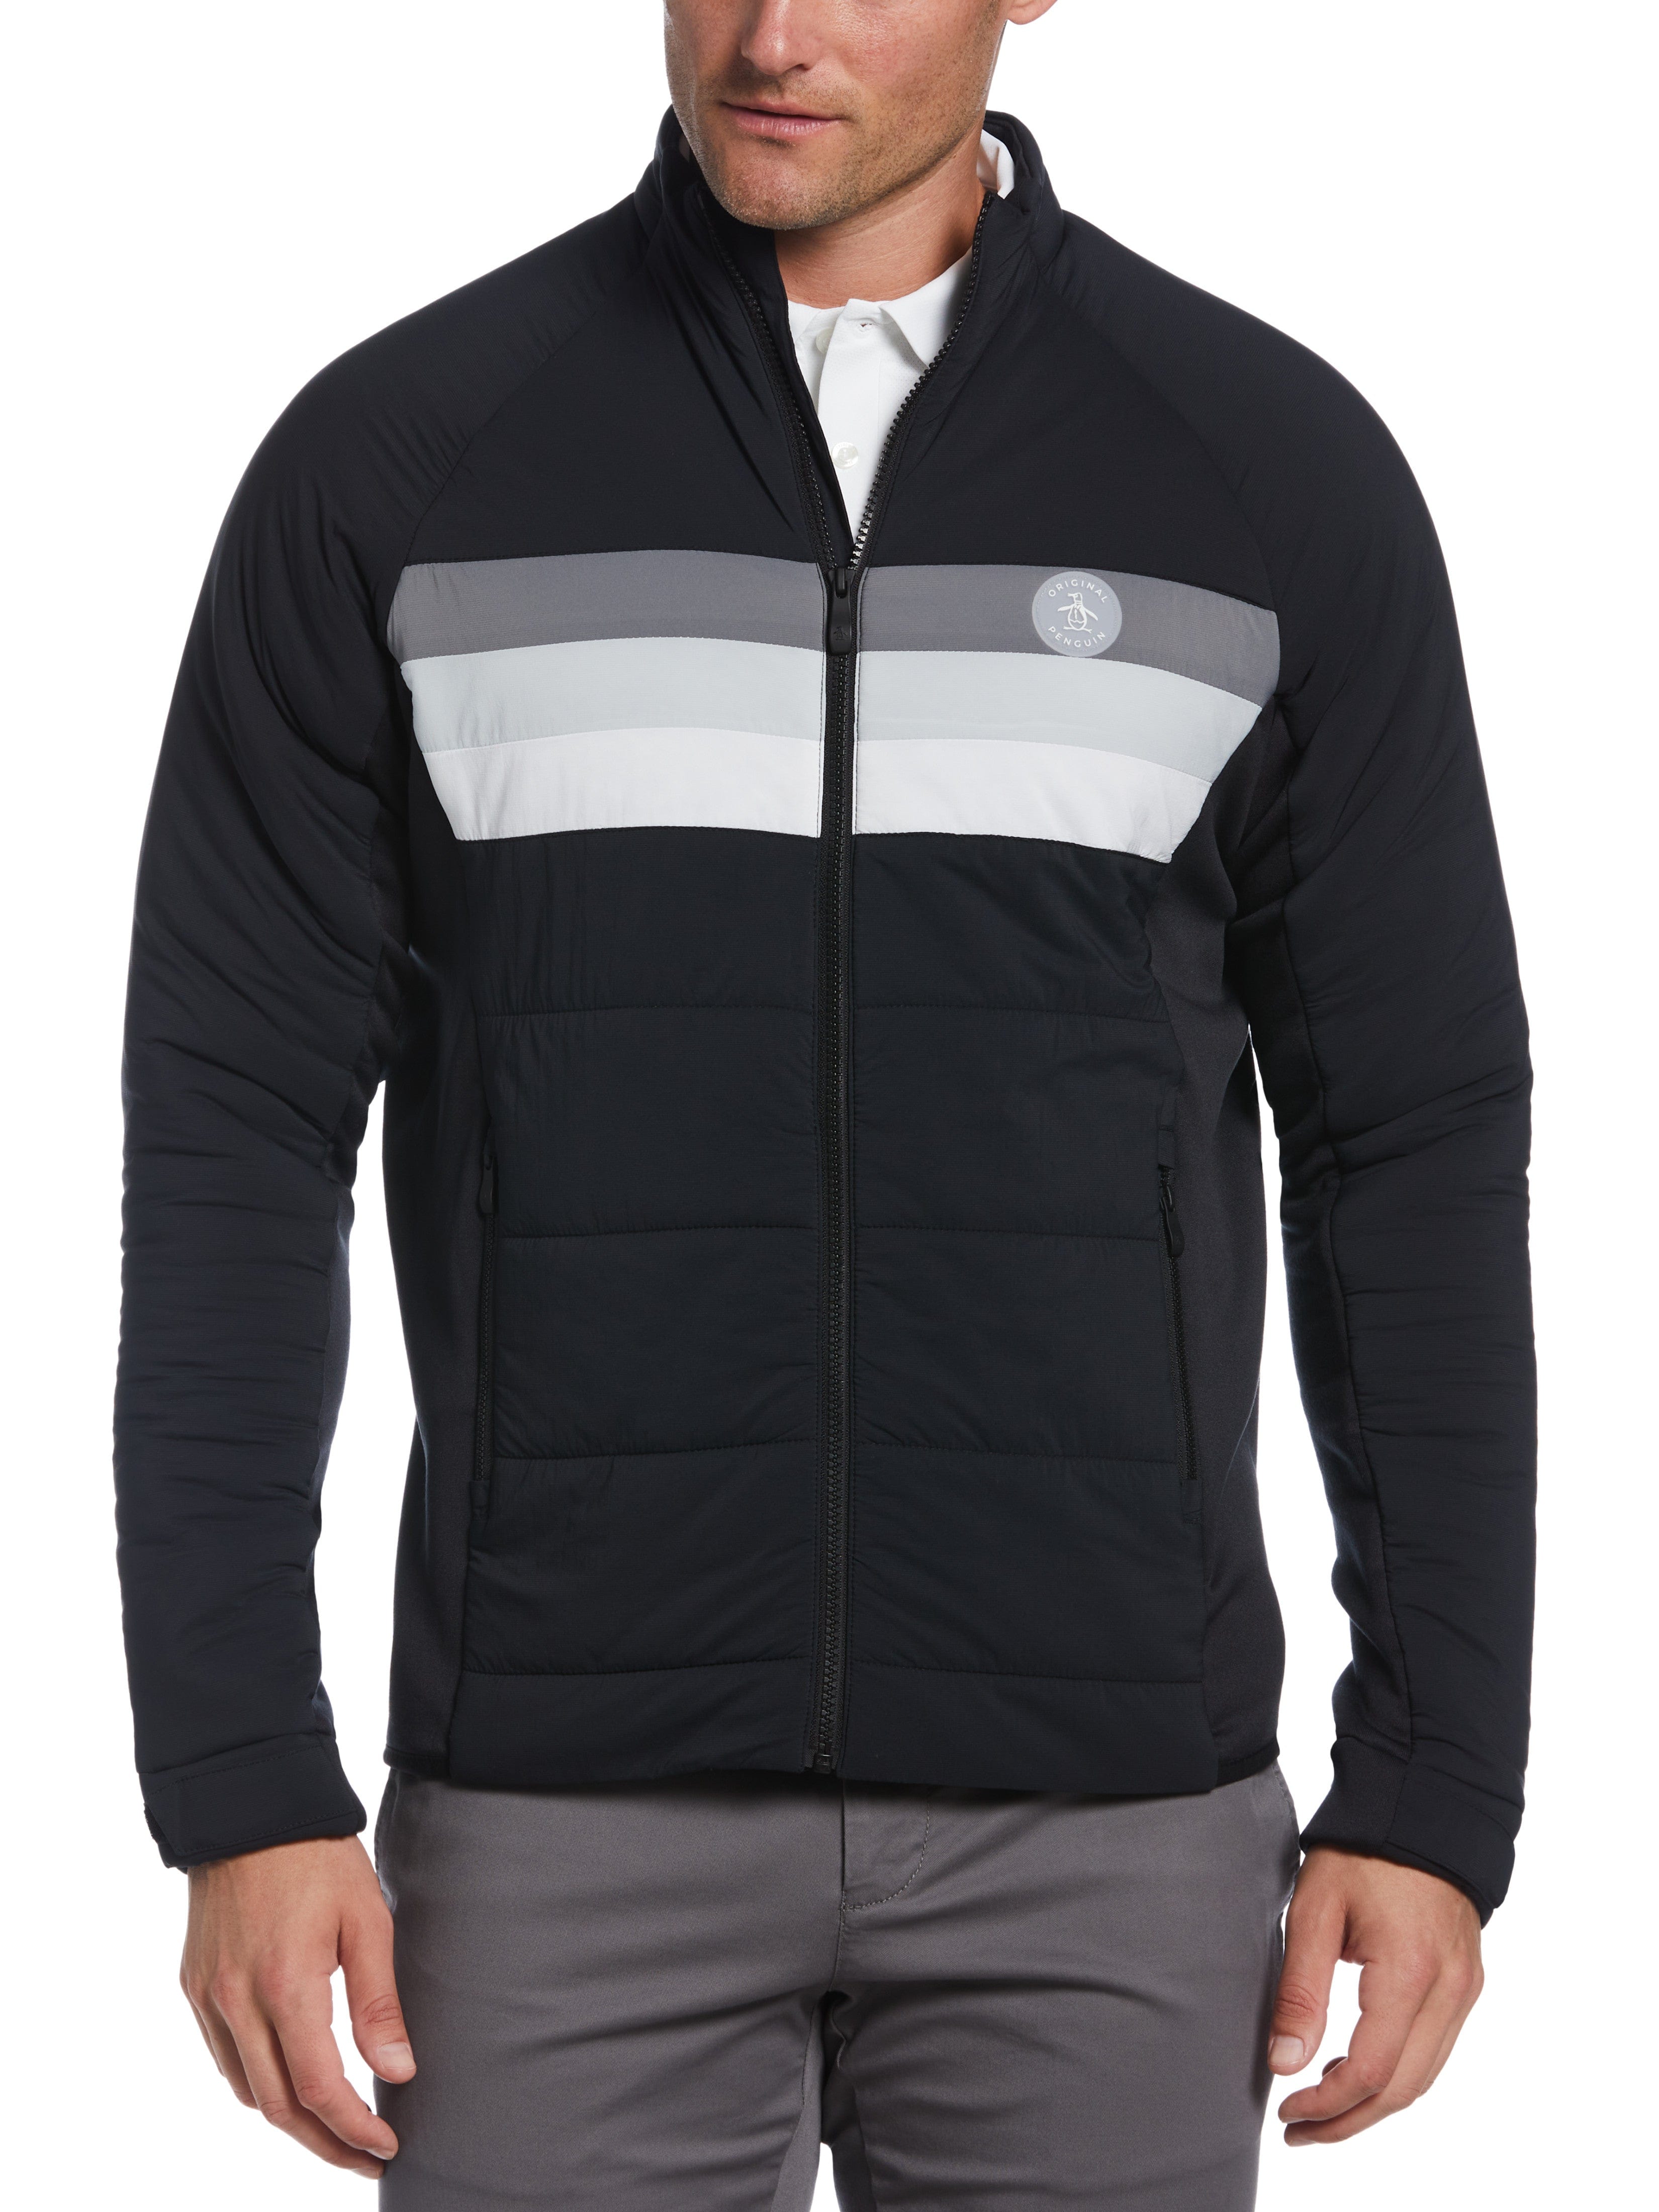 Original Penguin Mens Insulated 70s Golf Jacket Top, Size XL, Black, 100% Nylon | Golf Apparel Shop